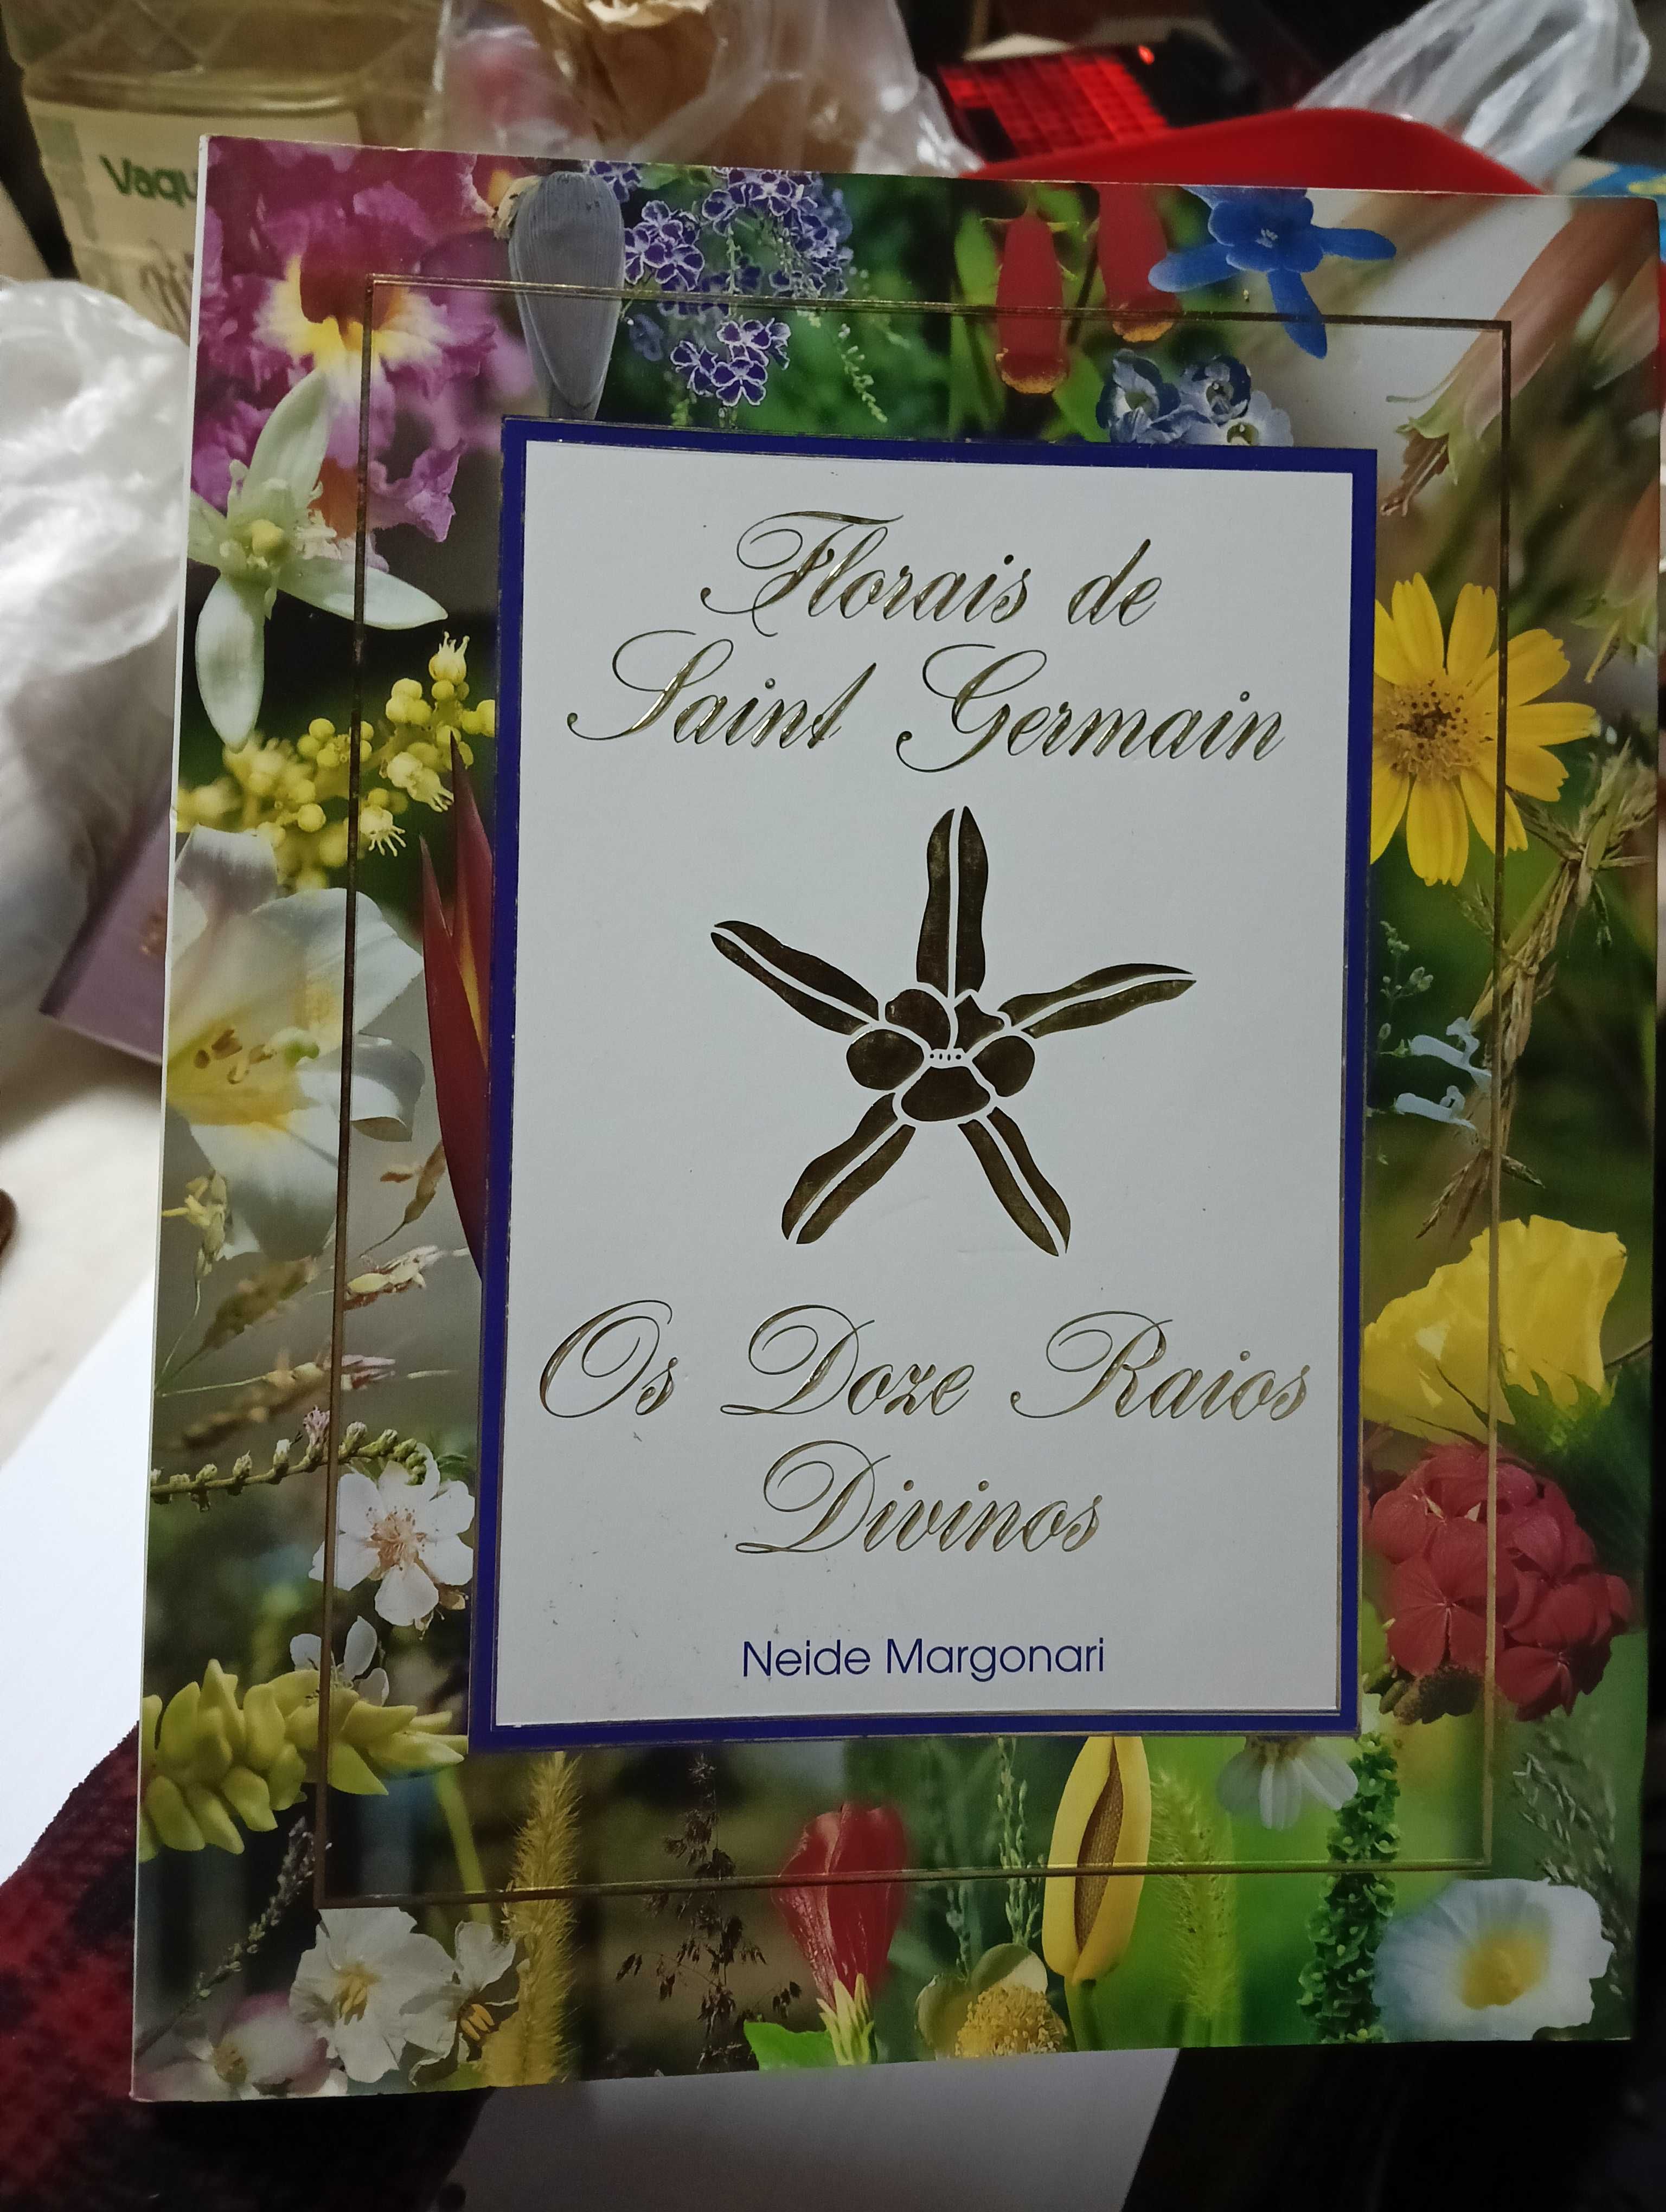 Florais de Saint Germain - Os Doze Raios Divinos - Neide Margonari